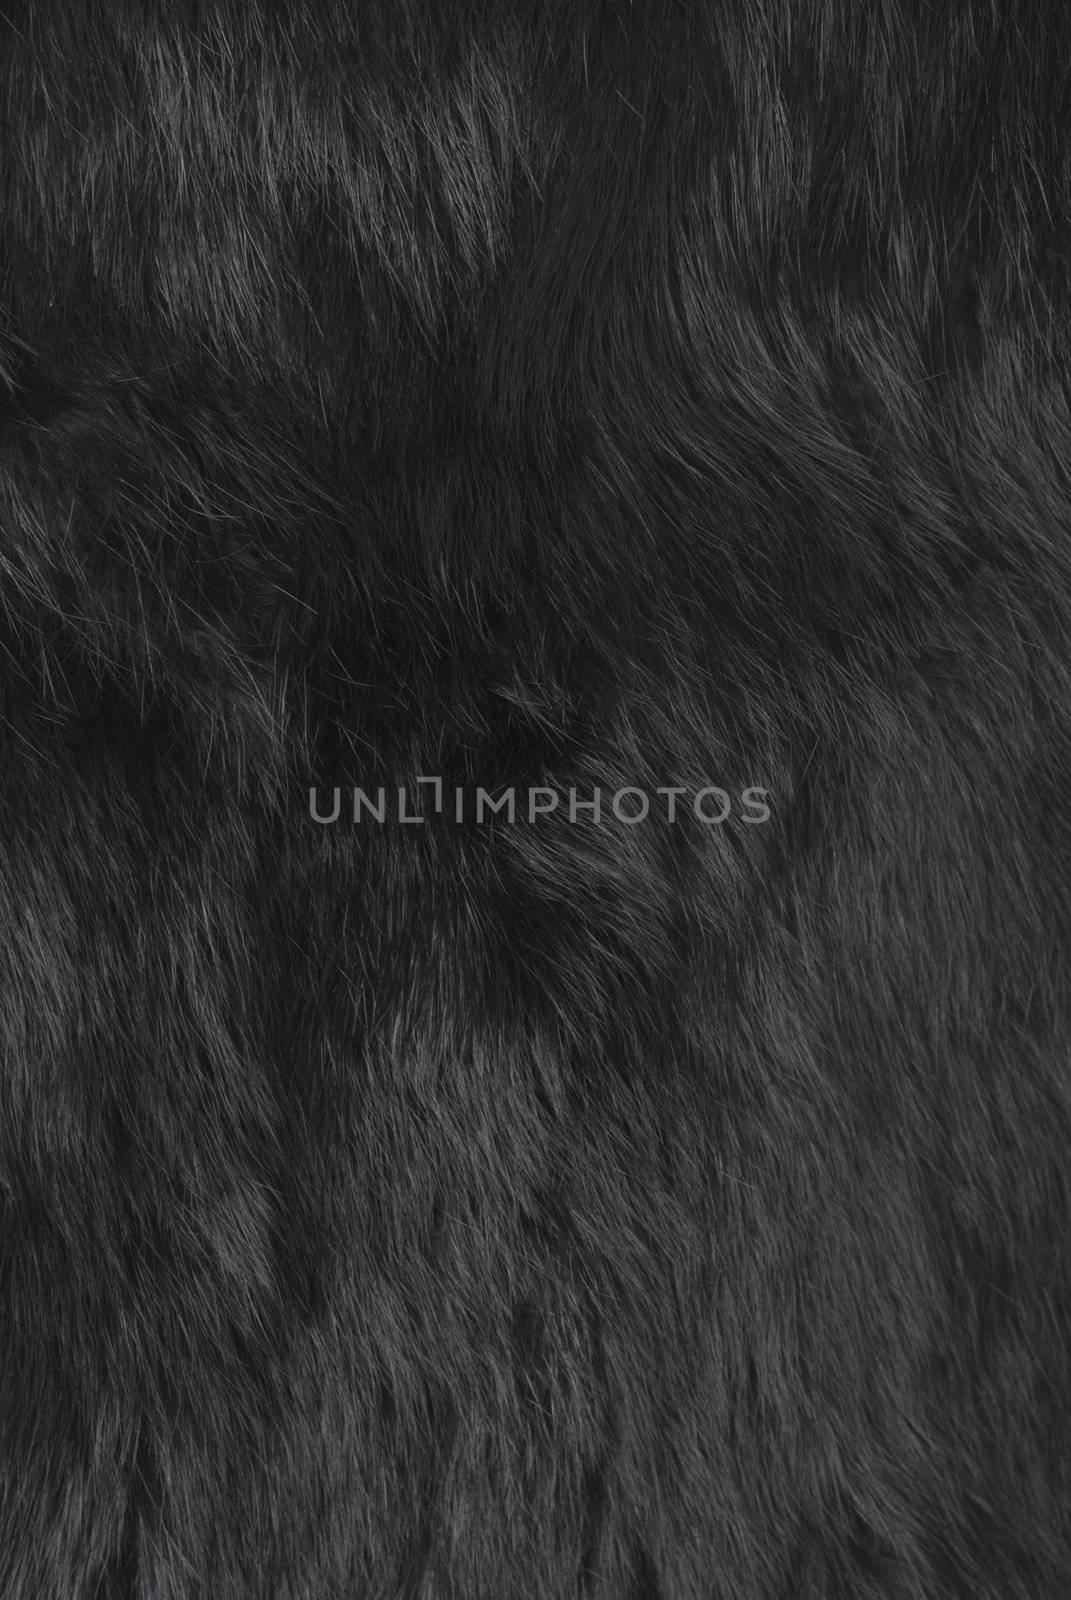 Black rabbit fur texture. Part of the winter fur coat